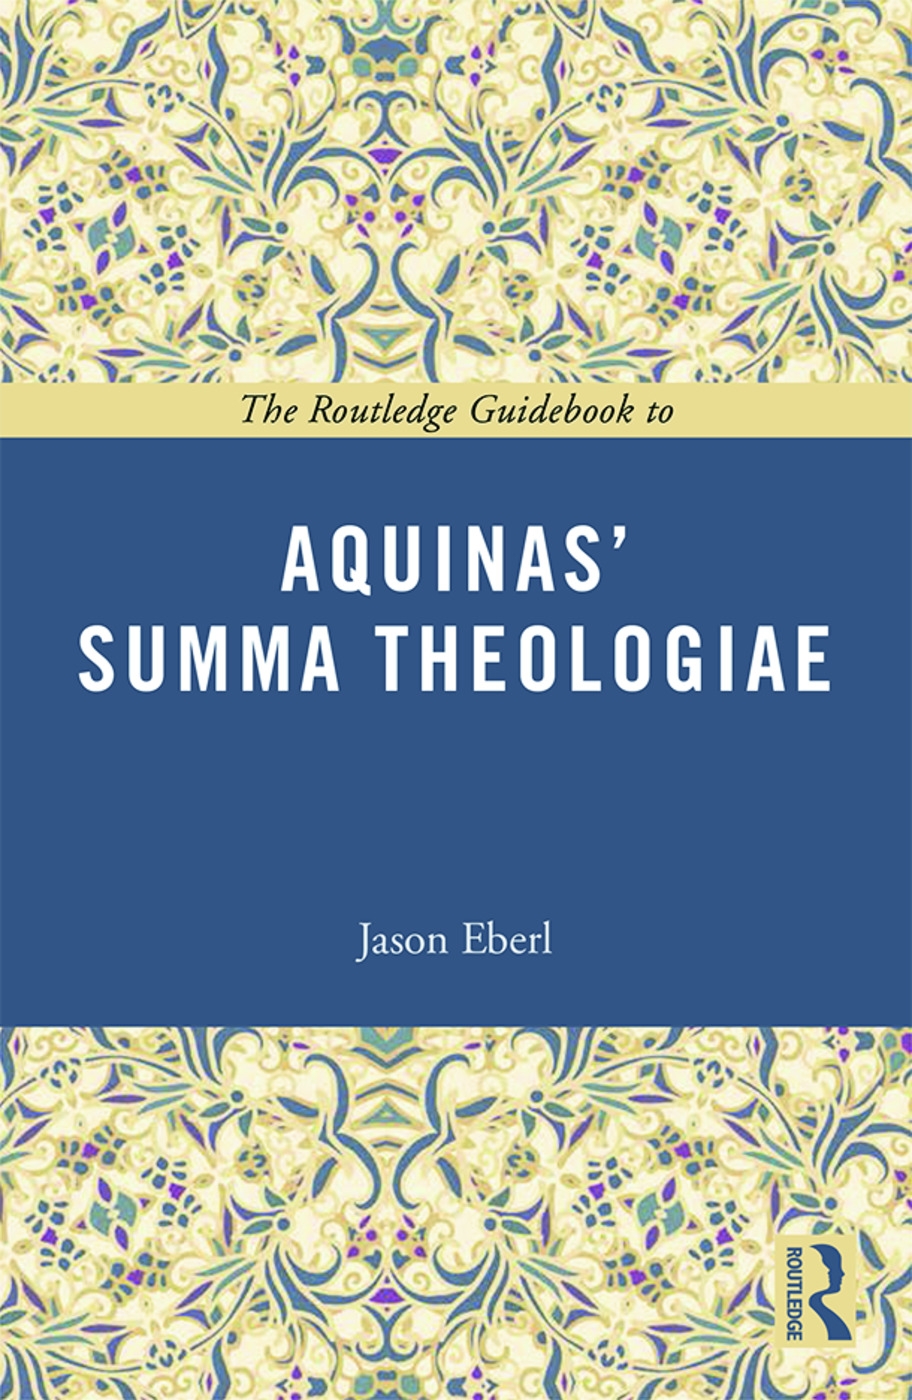 The Routledge Guidebook to Aquinas’ Summa Theologiae